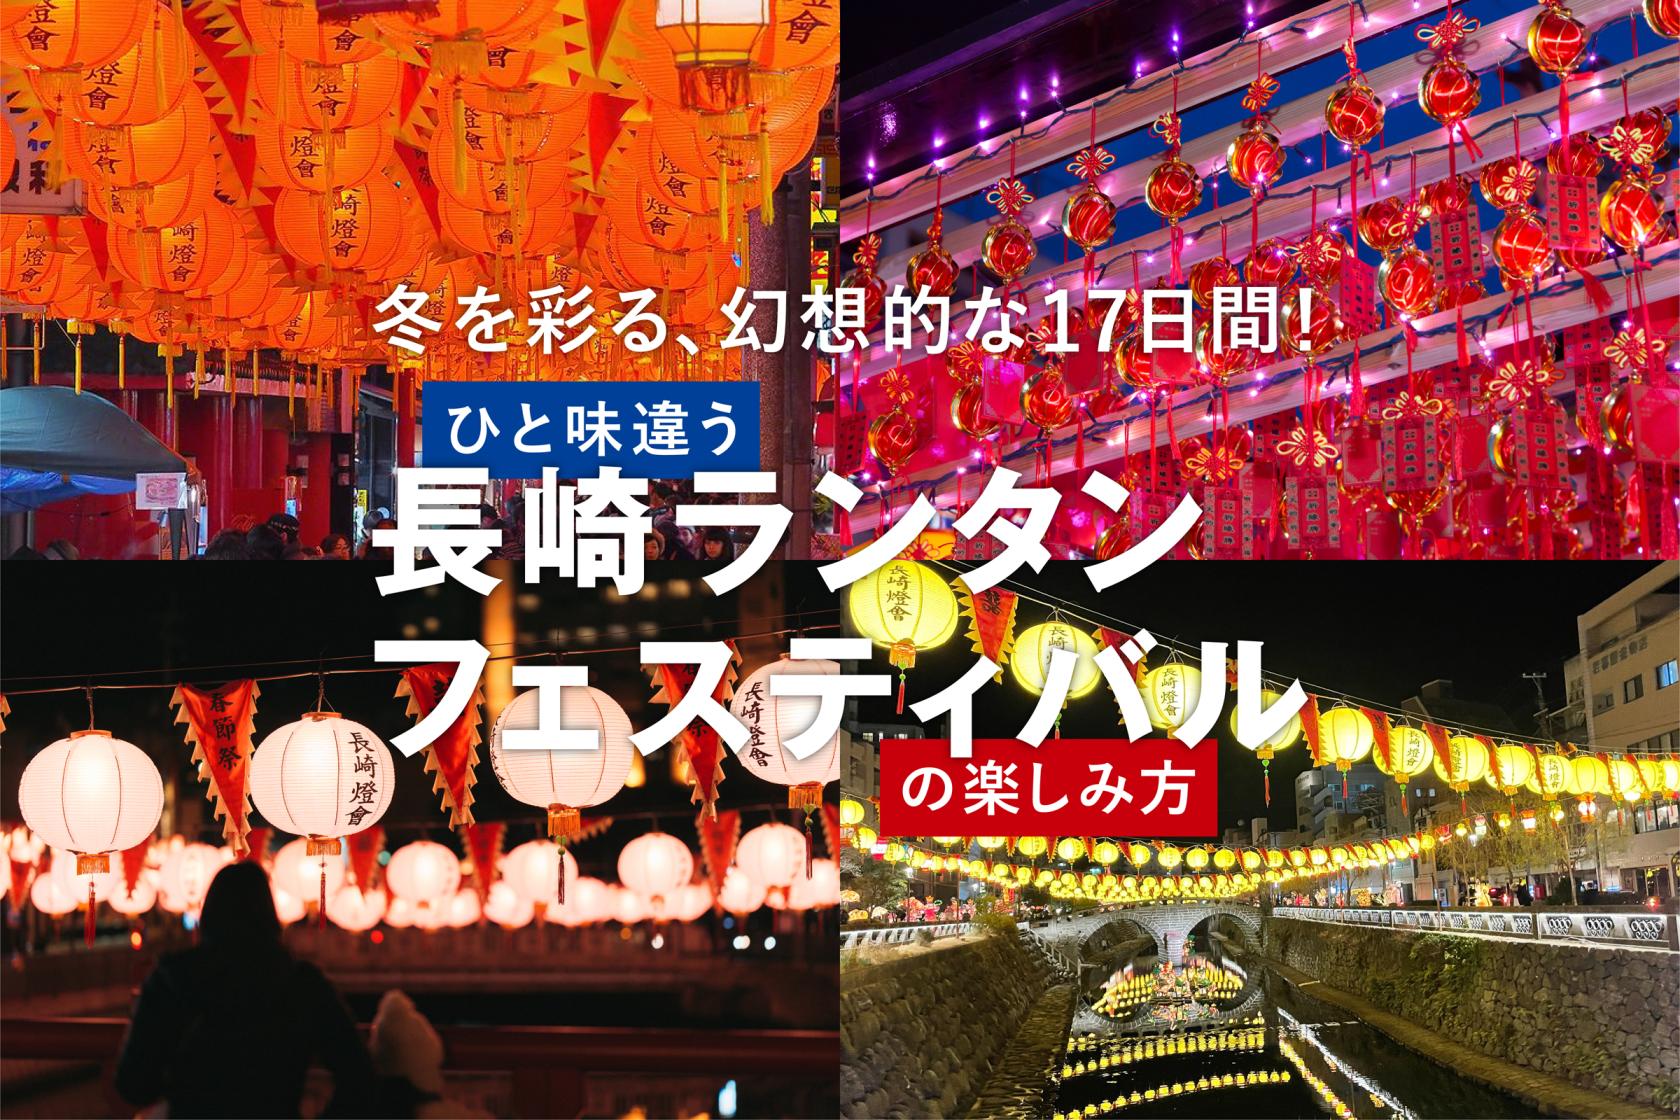 travel nagasakiホームページにて、「ランタンフェスティバル」新記事を公開中です-1